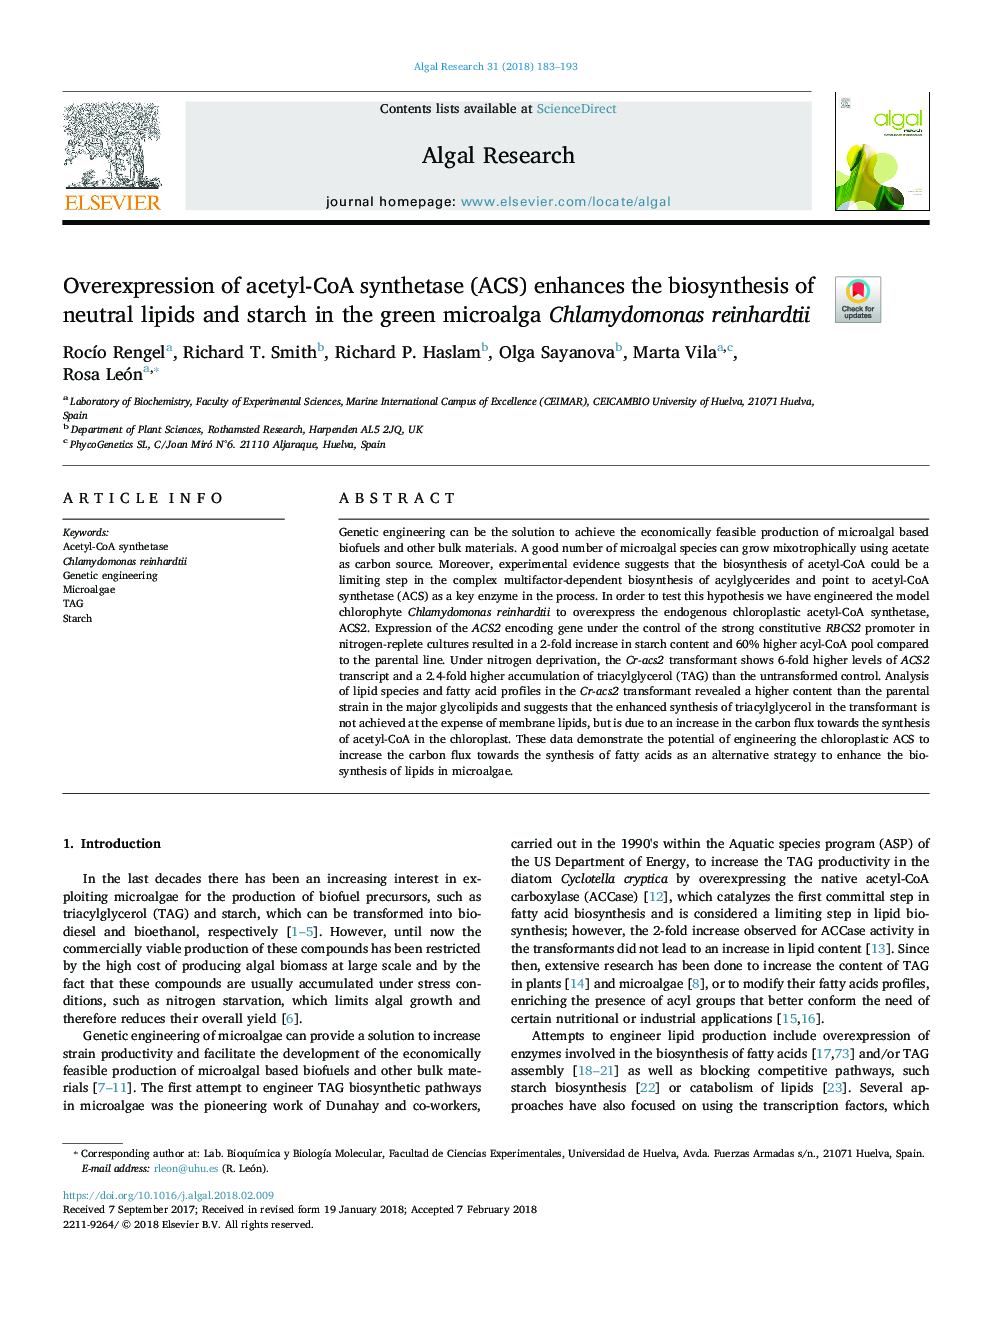 Overexpression of acetyl-CoA synthetase (ACS) enhances the biosynthesis of neutral lipids and starch in the green microalga Chlamydomonas reinhardtii